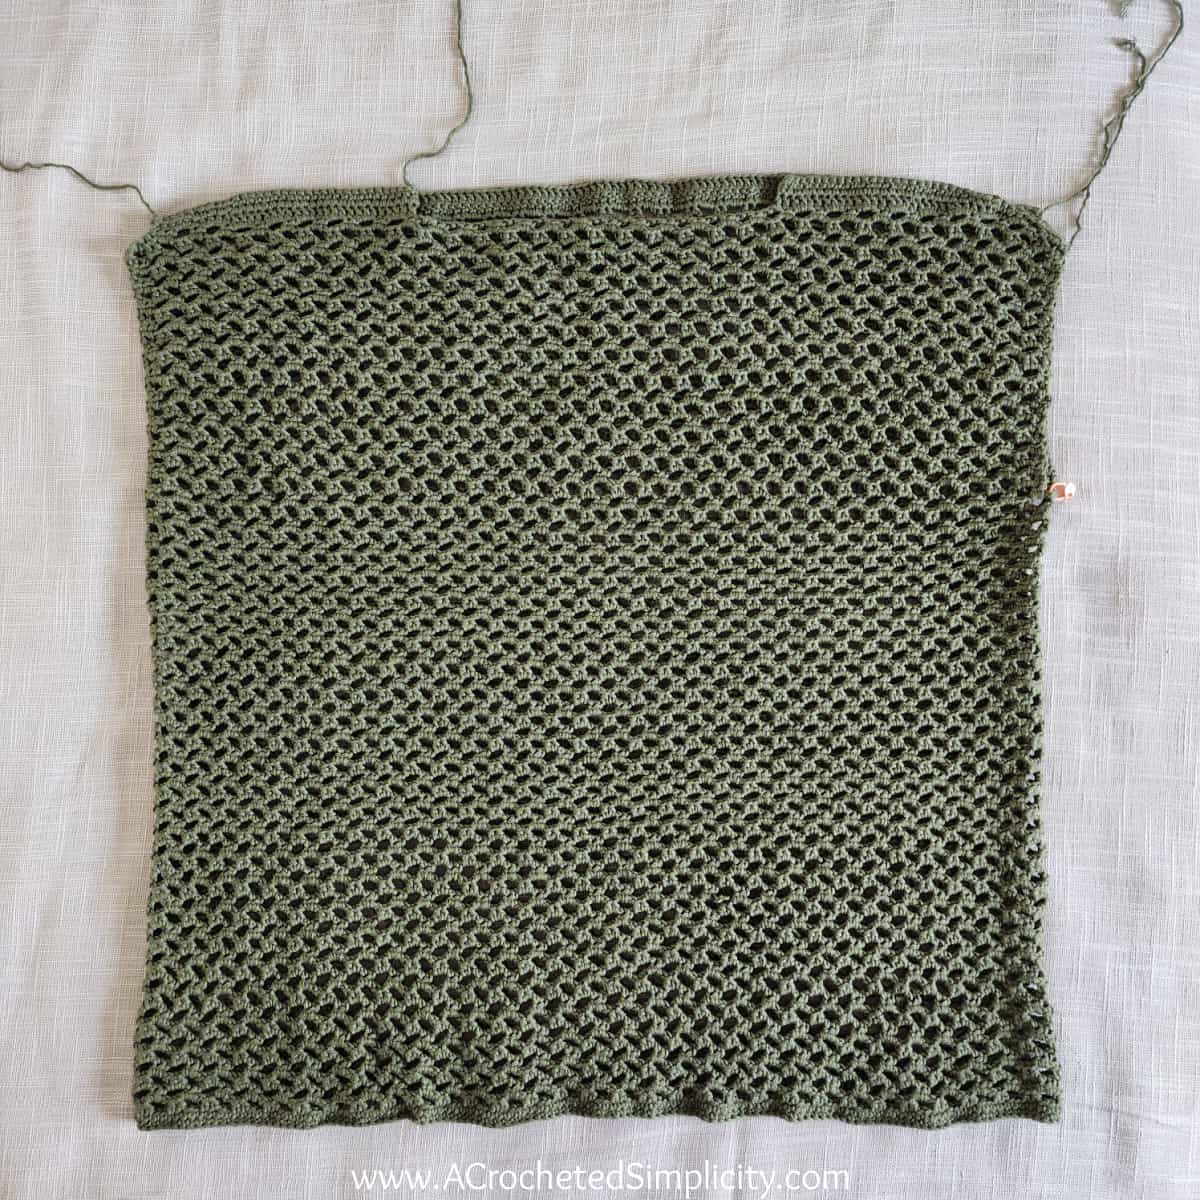 Olive green mesh crochet top laying on ecru fabric.